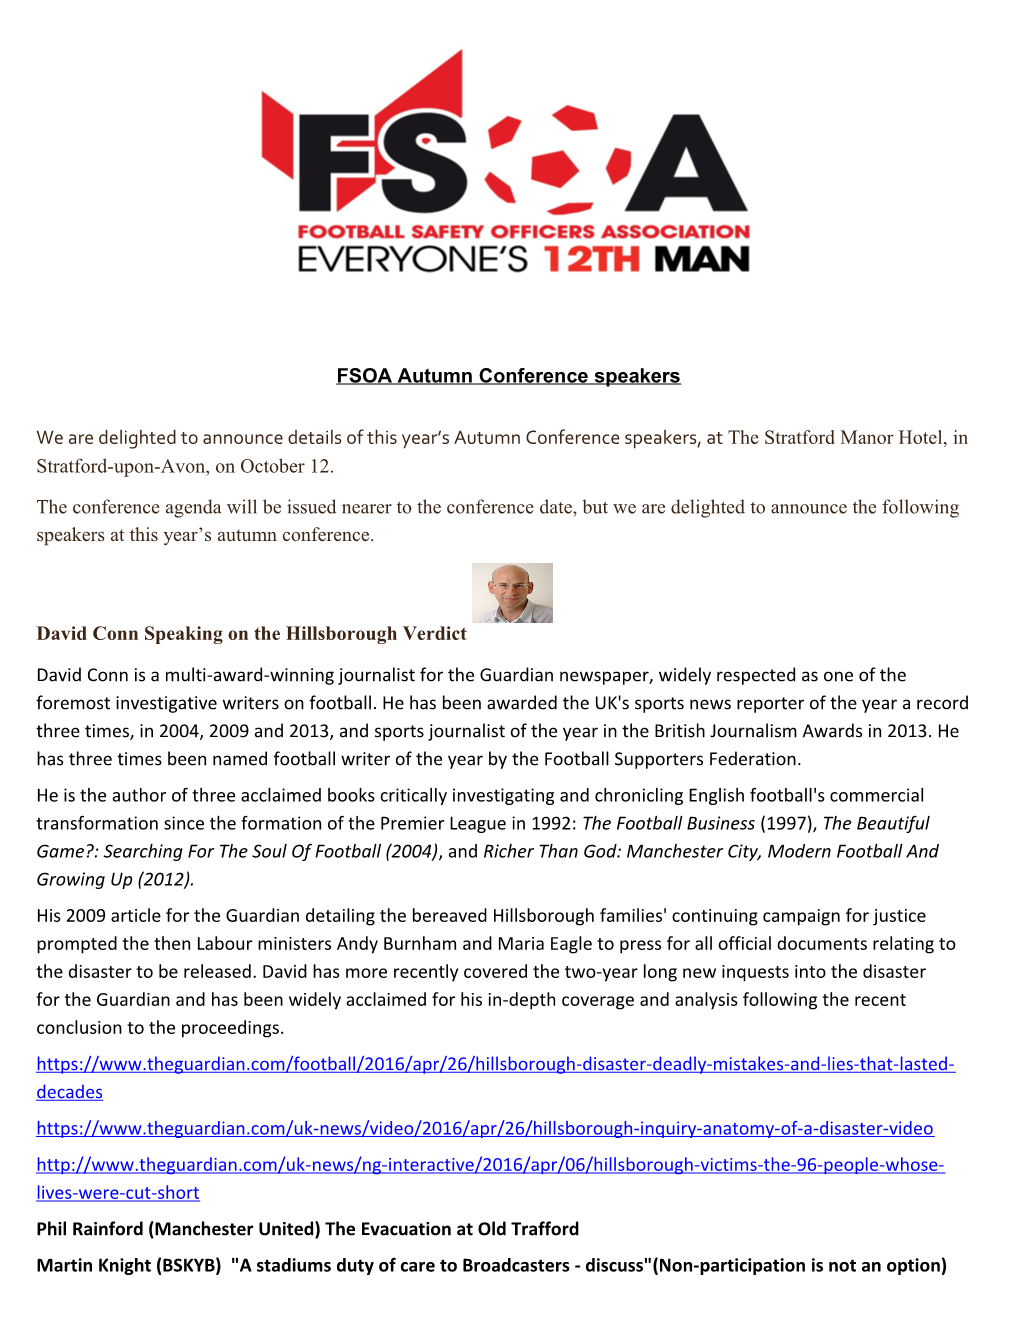 FSOA Autumn Conference Speakers